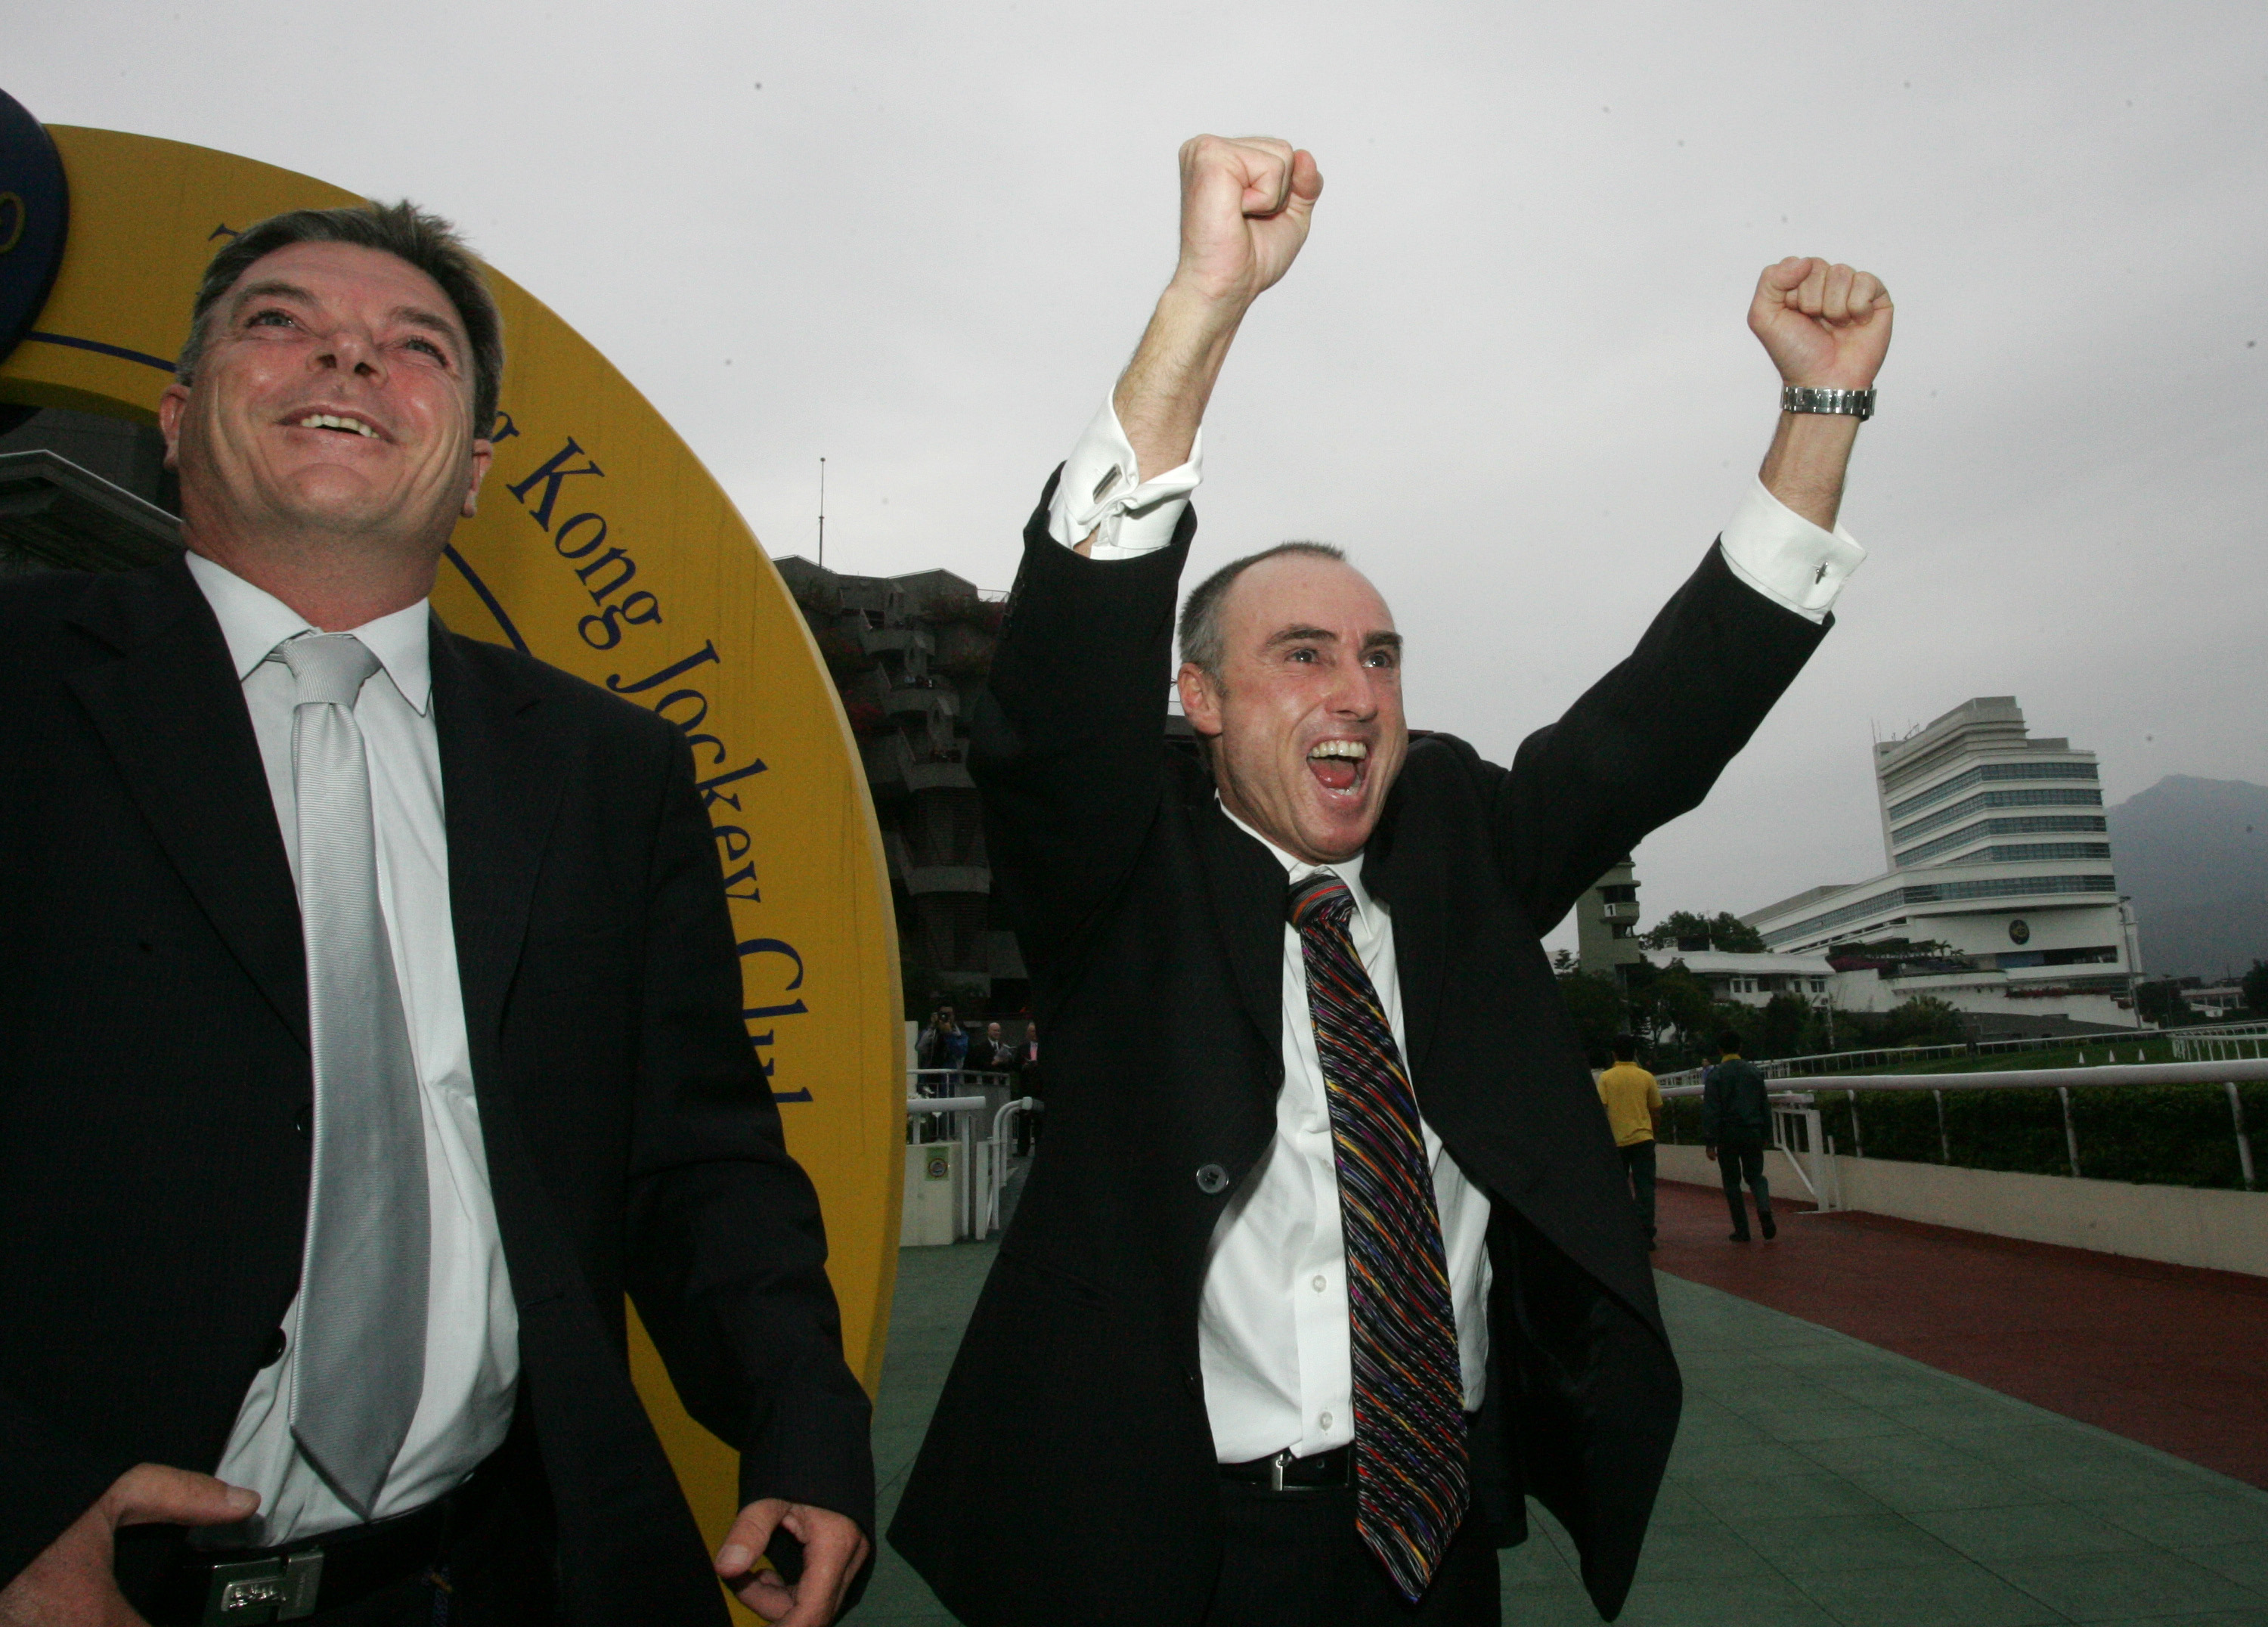 Paul O’Sullivan celebrates winning the 2007 Hong Kong Derby (2000m).